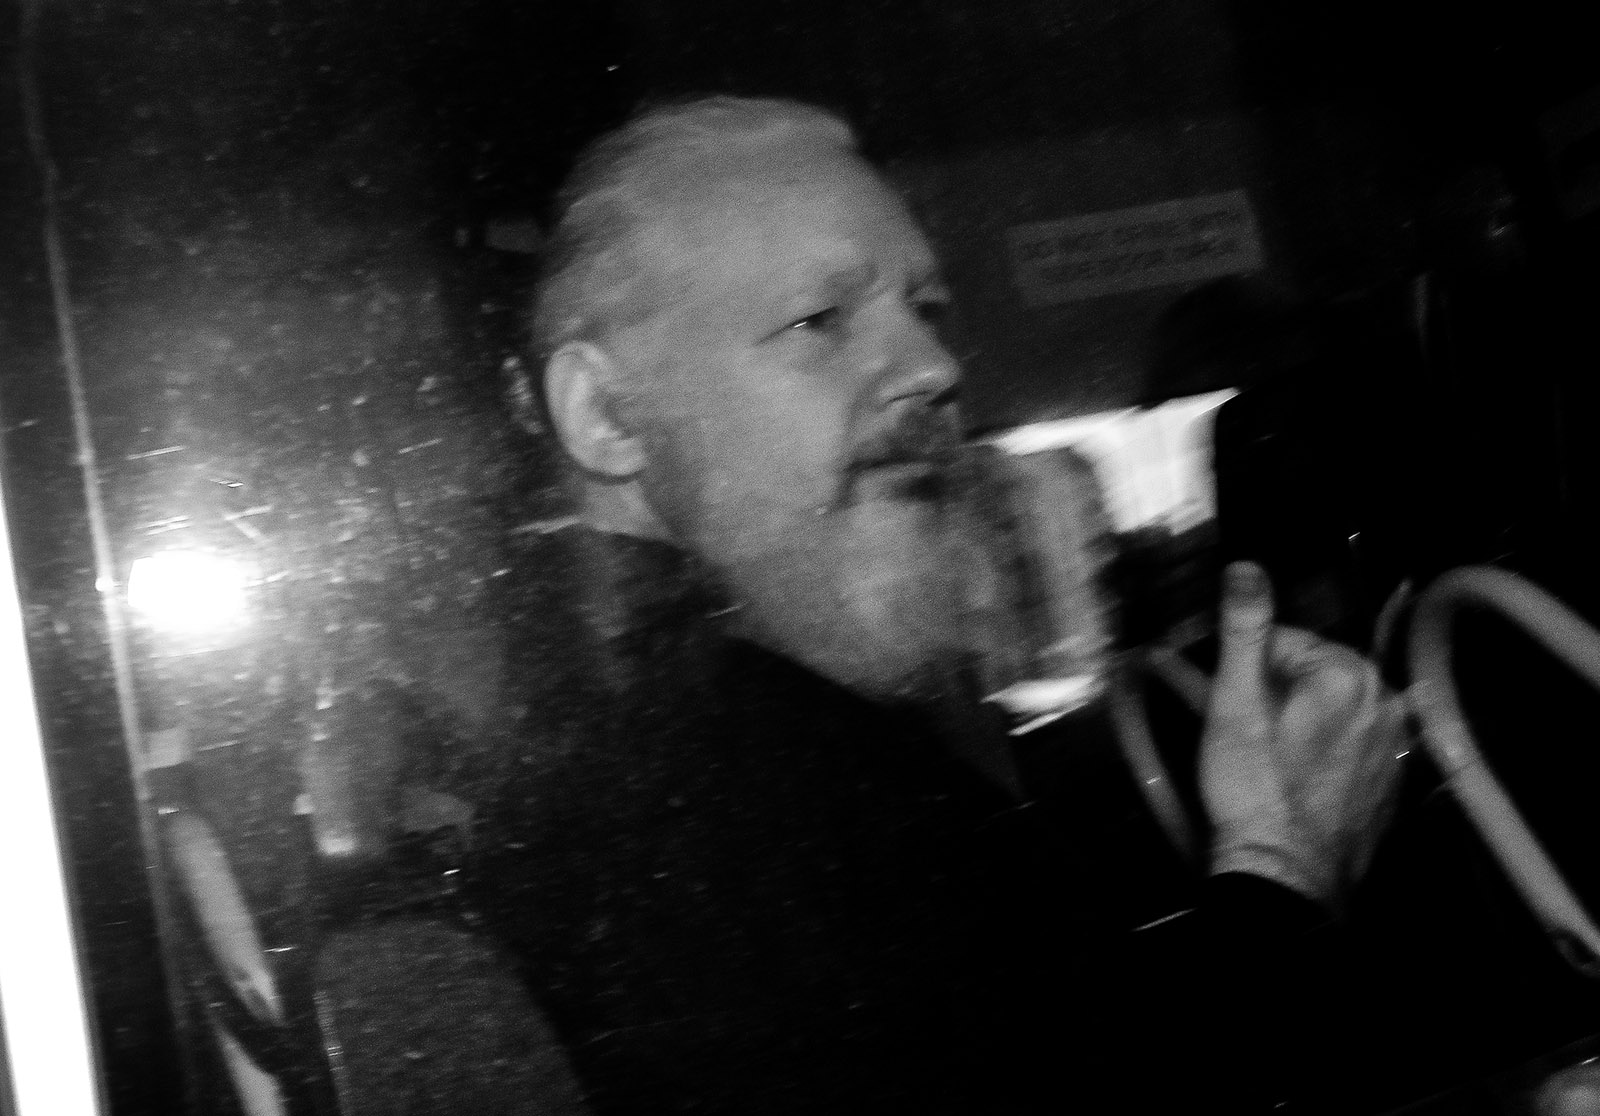 Julian Assange on his way to court following his arrest at the Ecuadorian Embassy, London, England, April 11, 2019